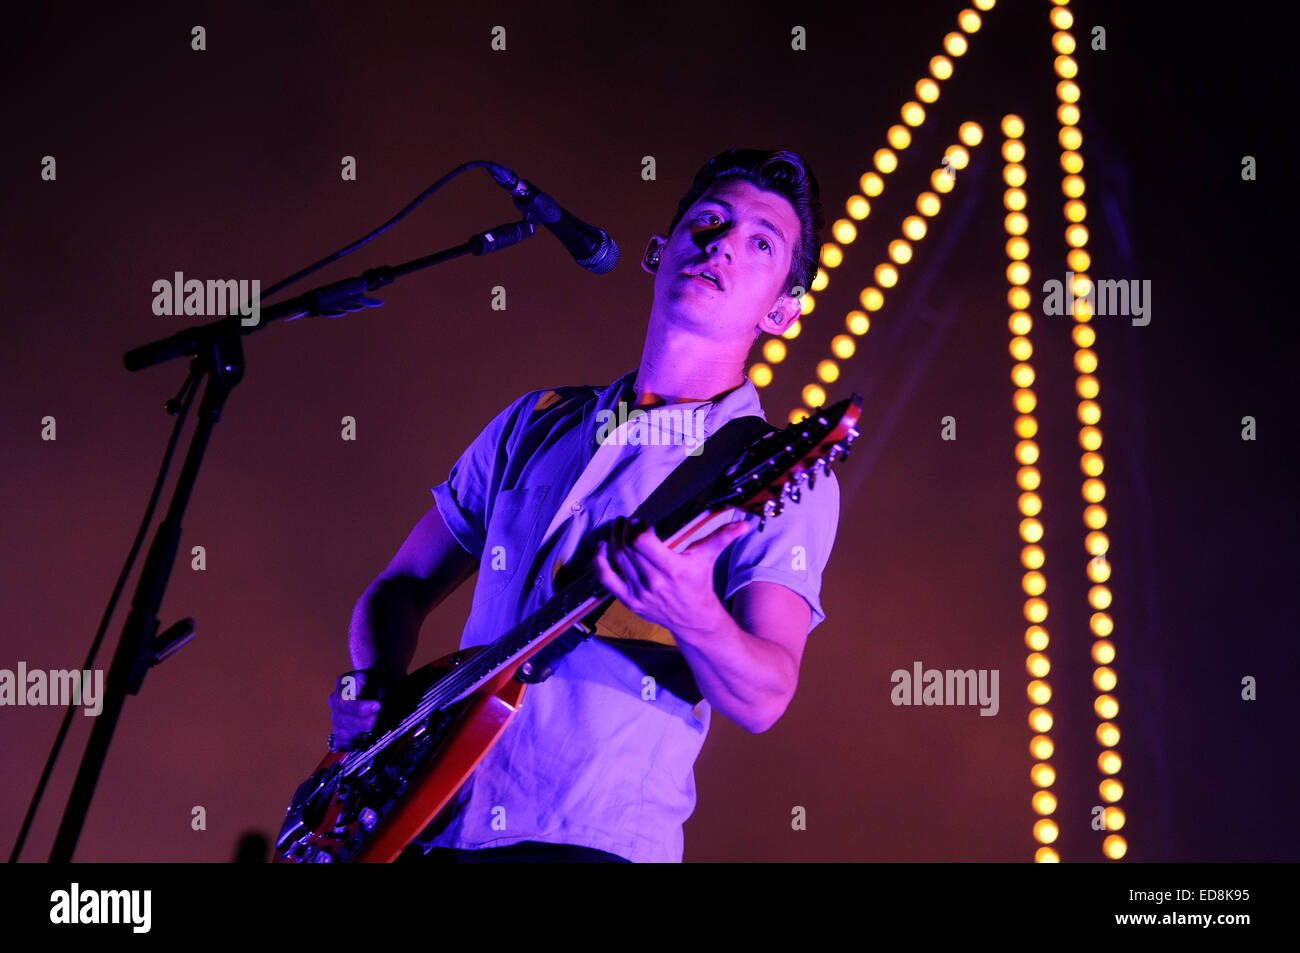 BENICASIM, SPAIN - JULY 20: Alex Turner, frontman of Arctic Monkeys band, concert performance at FIB. Stock Photo